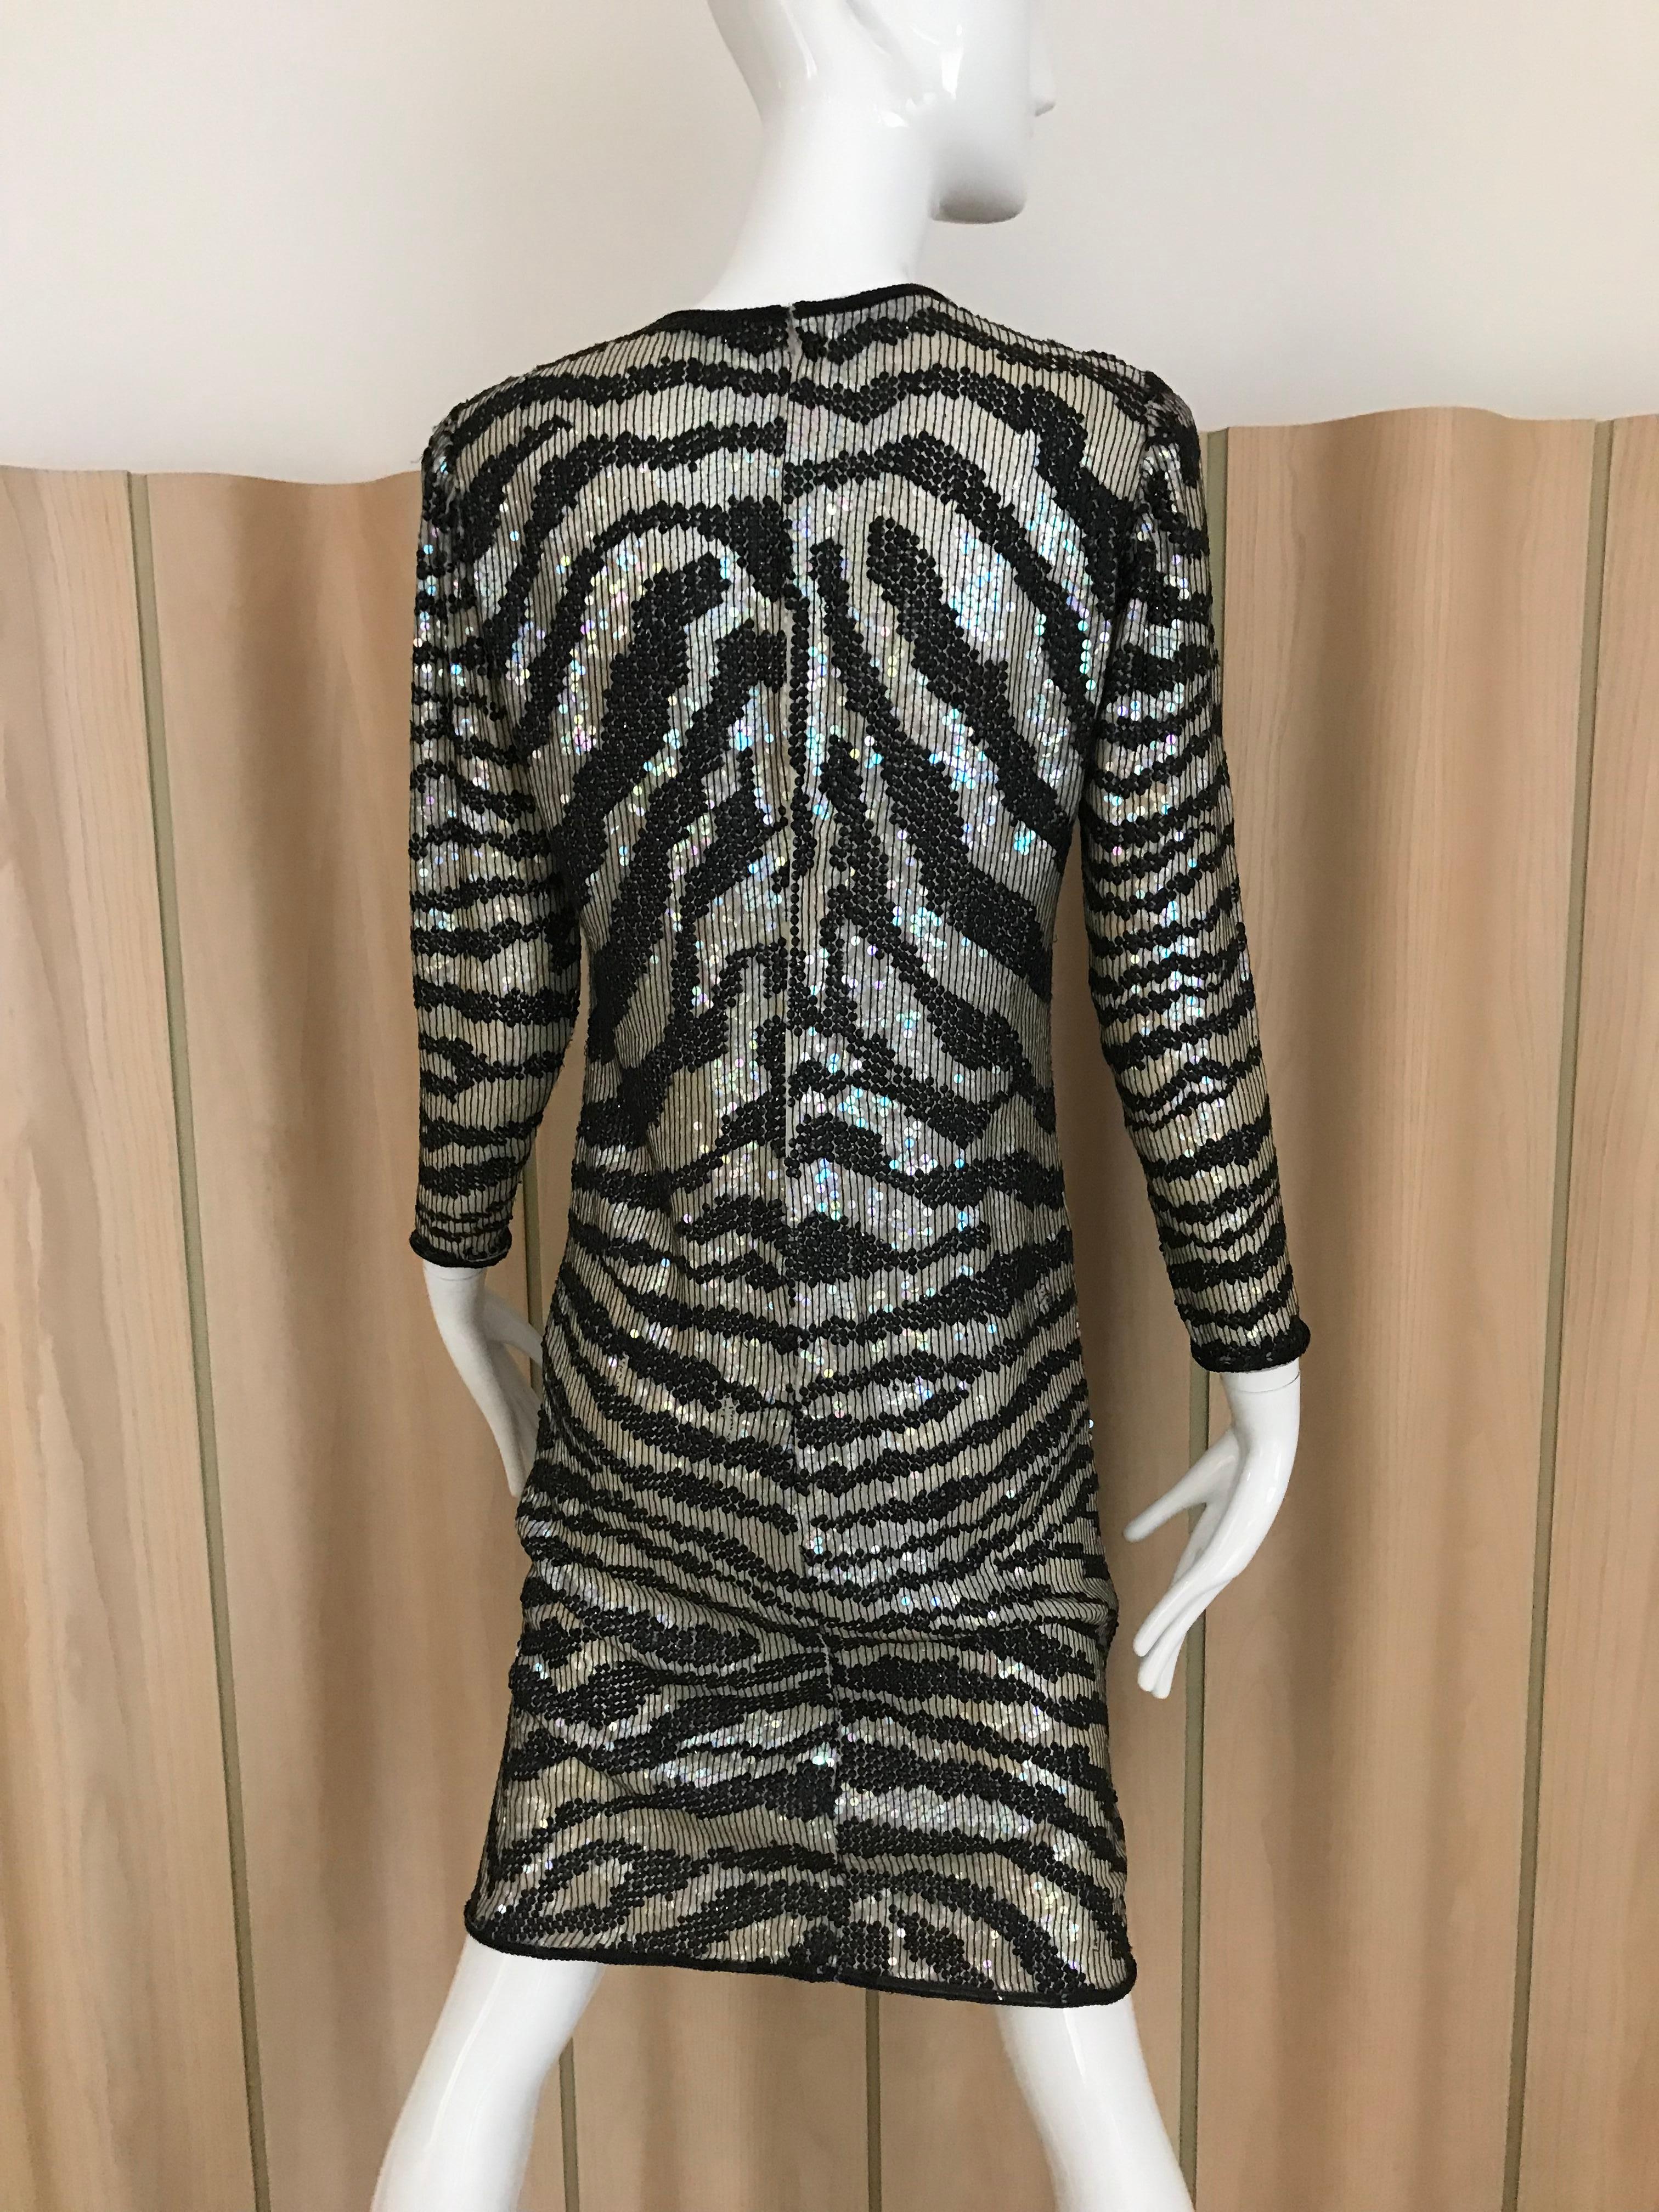 1970s HALSTON Black and Silver Sequins Animal Print Sheath Dress 1